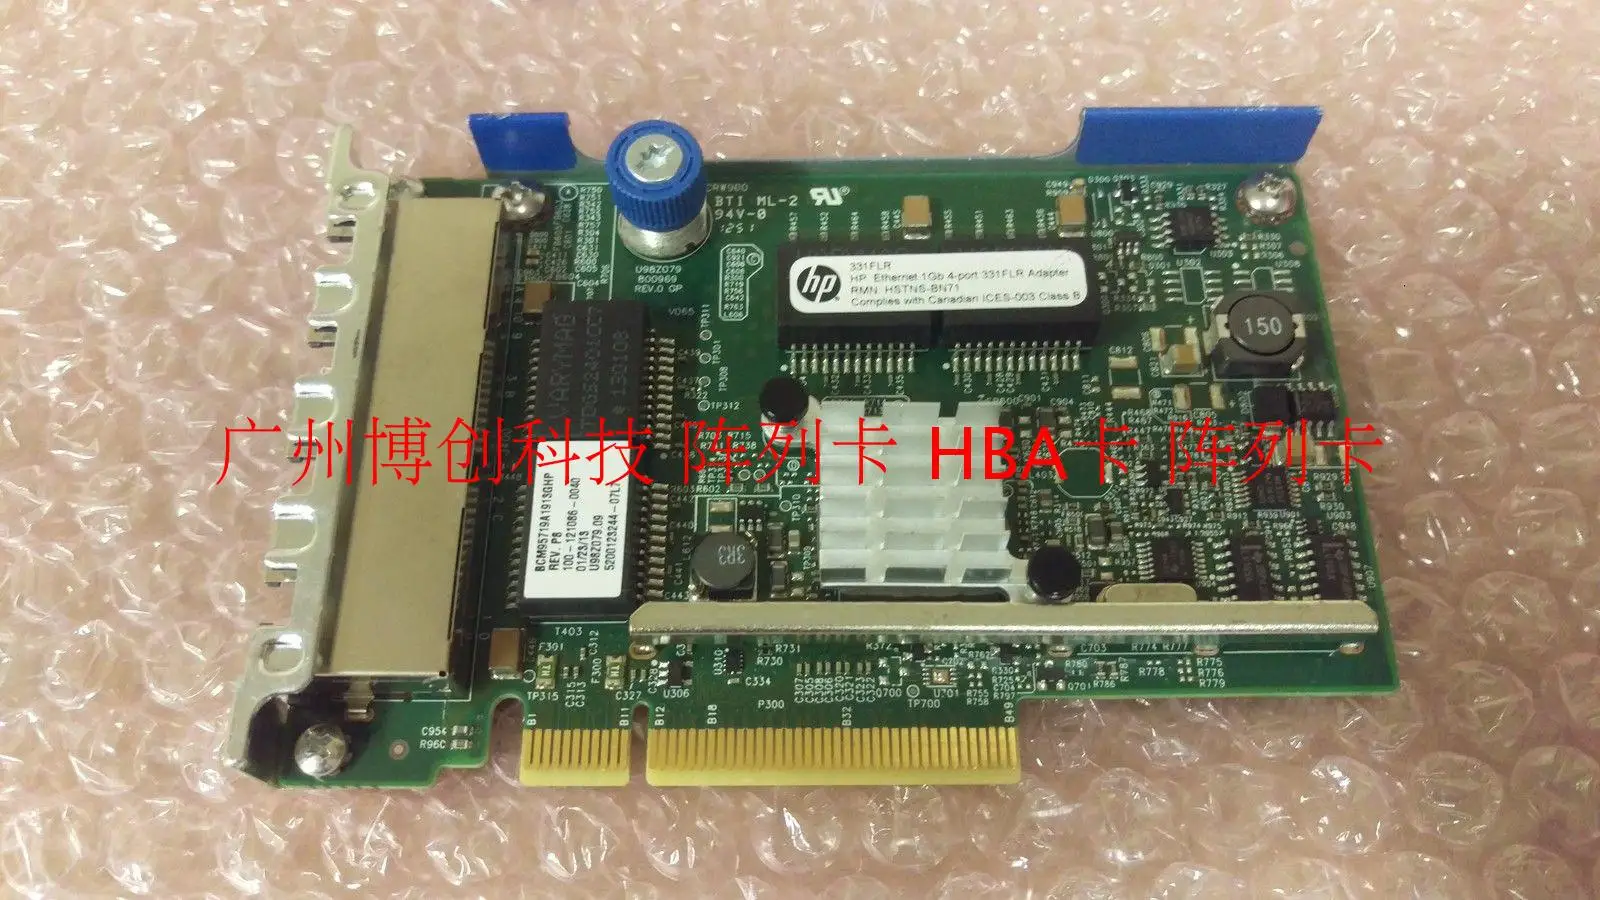 

For HP 331FLR 629135-B21 634025-001 4-port DL360P G8 4-port Gigabit network card